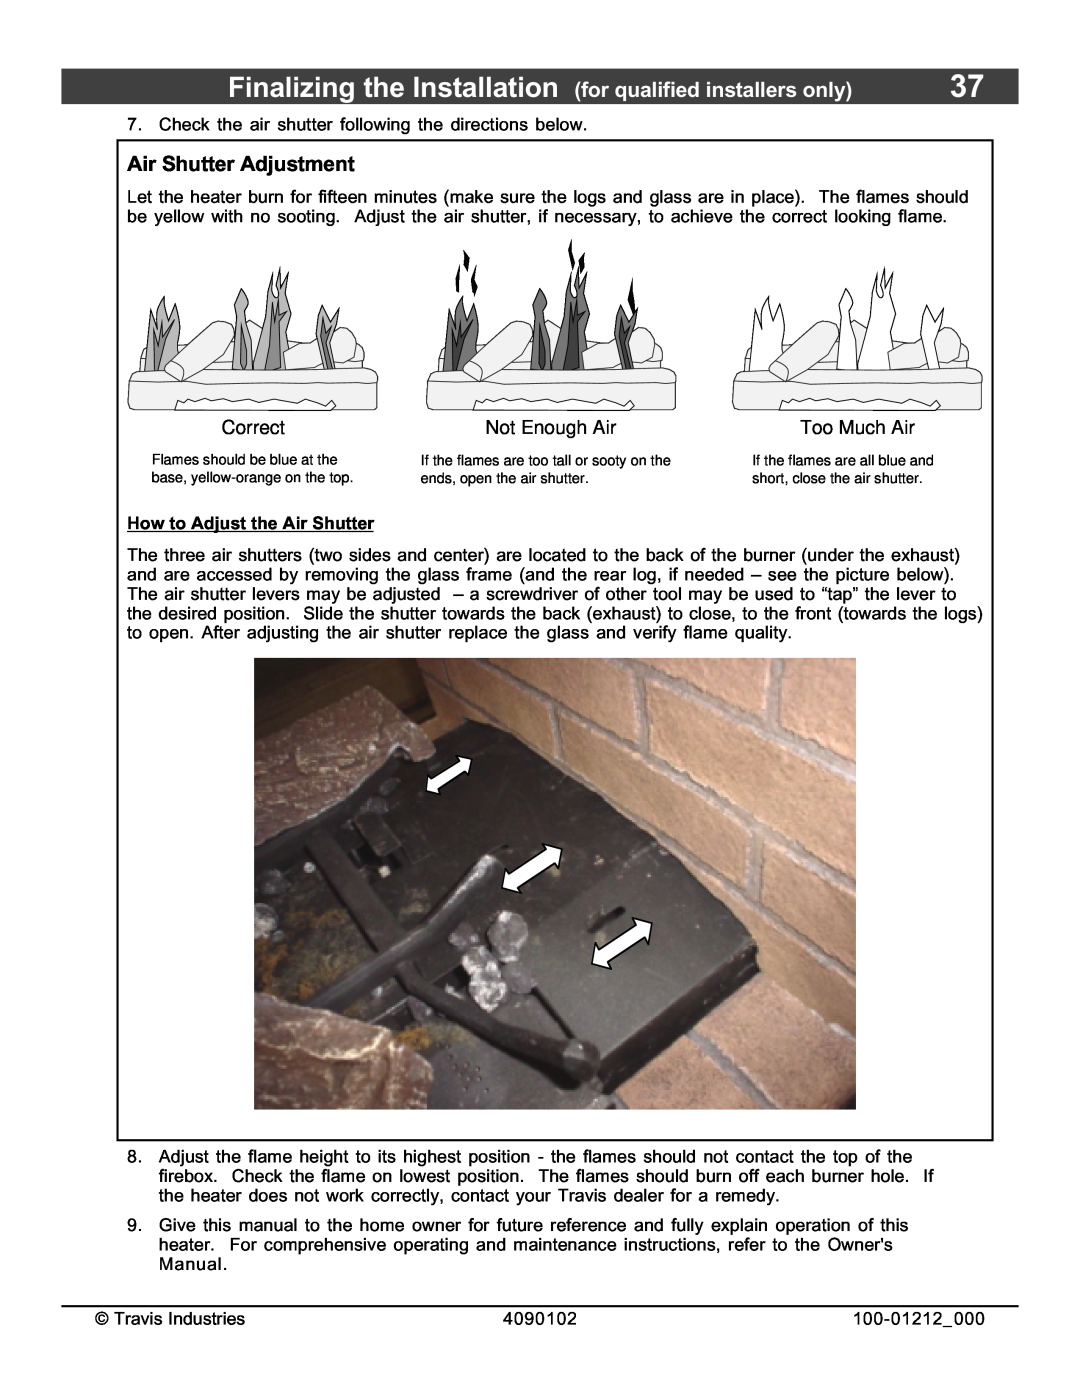 FireplaceXtrordinair 36CF installation manual Air Shutter Adjustment, Correct, Not Enough Air, Too Much Air 